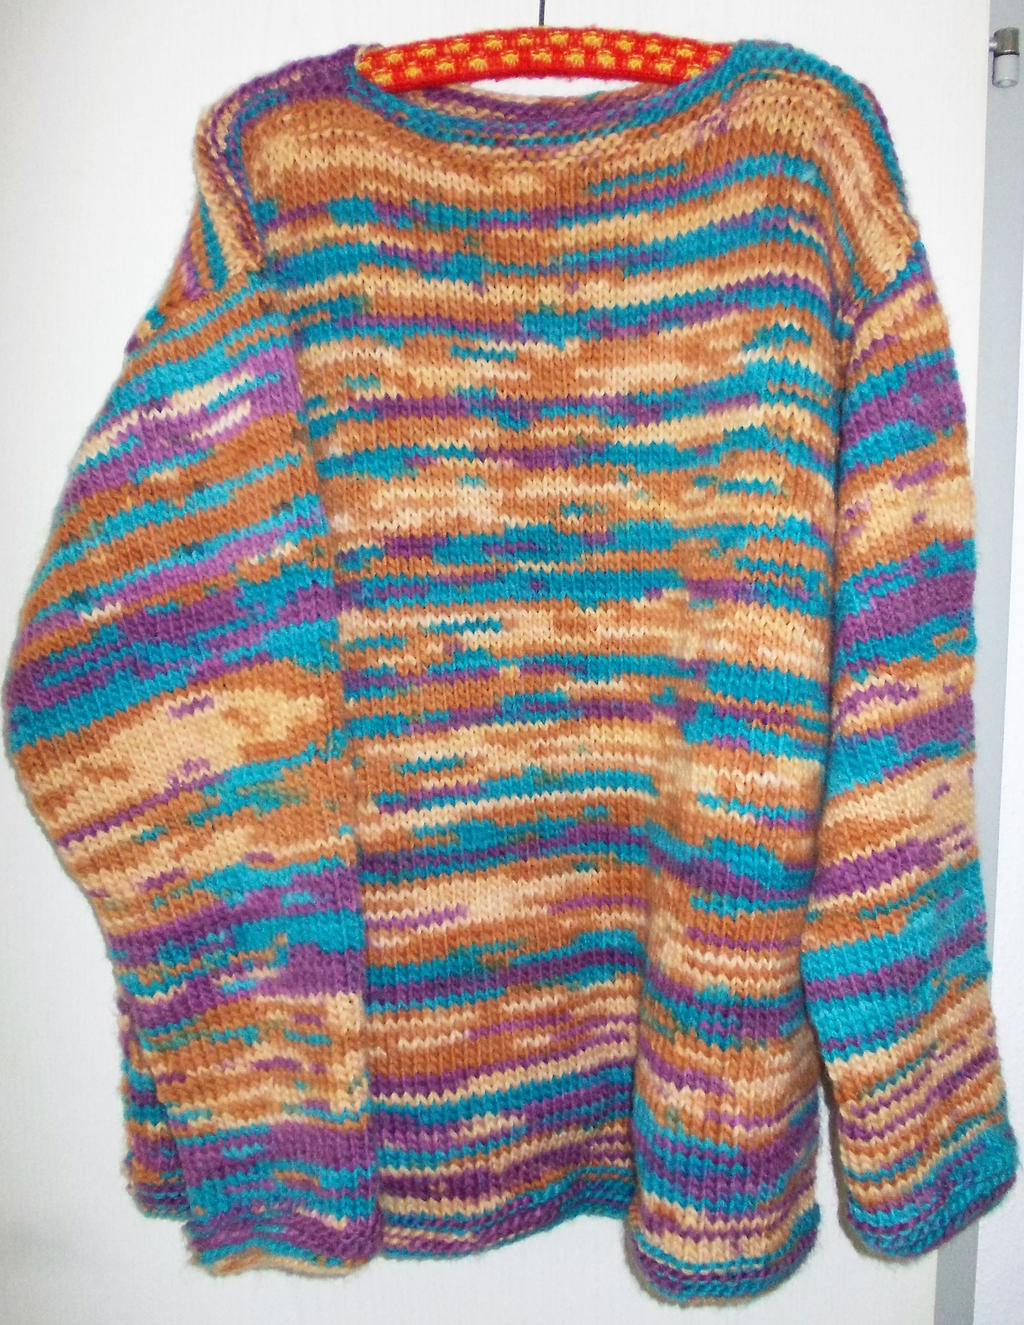 ''Arizona Sunset'' Sweater by MoonyMina on DeviantArt